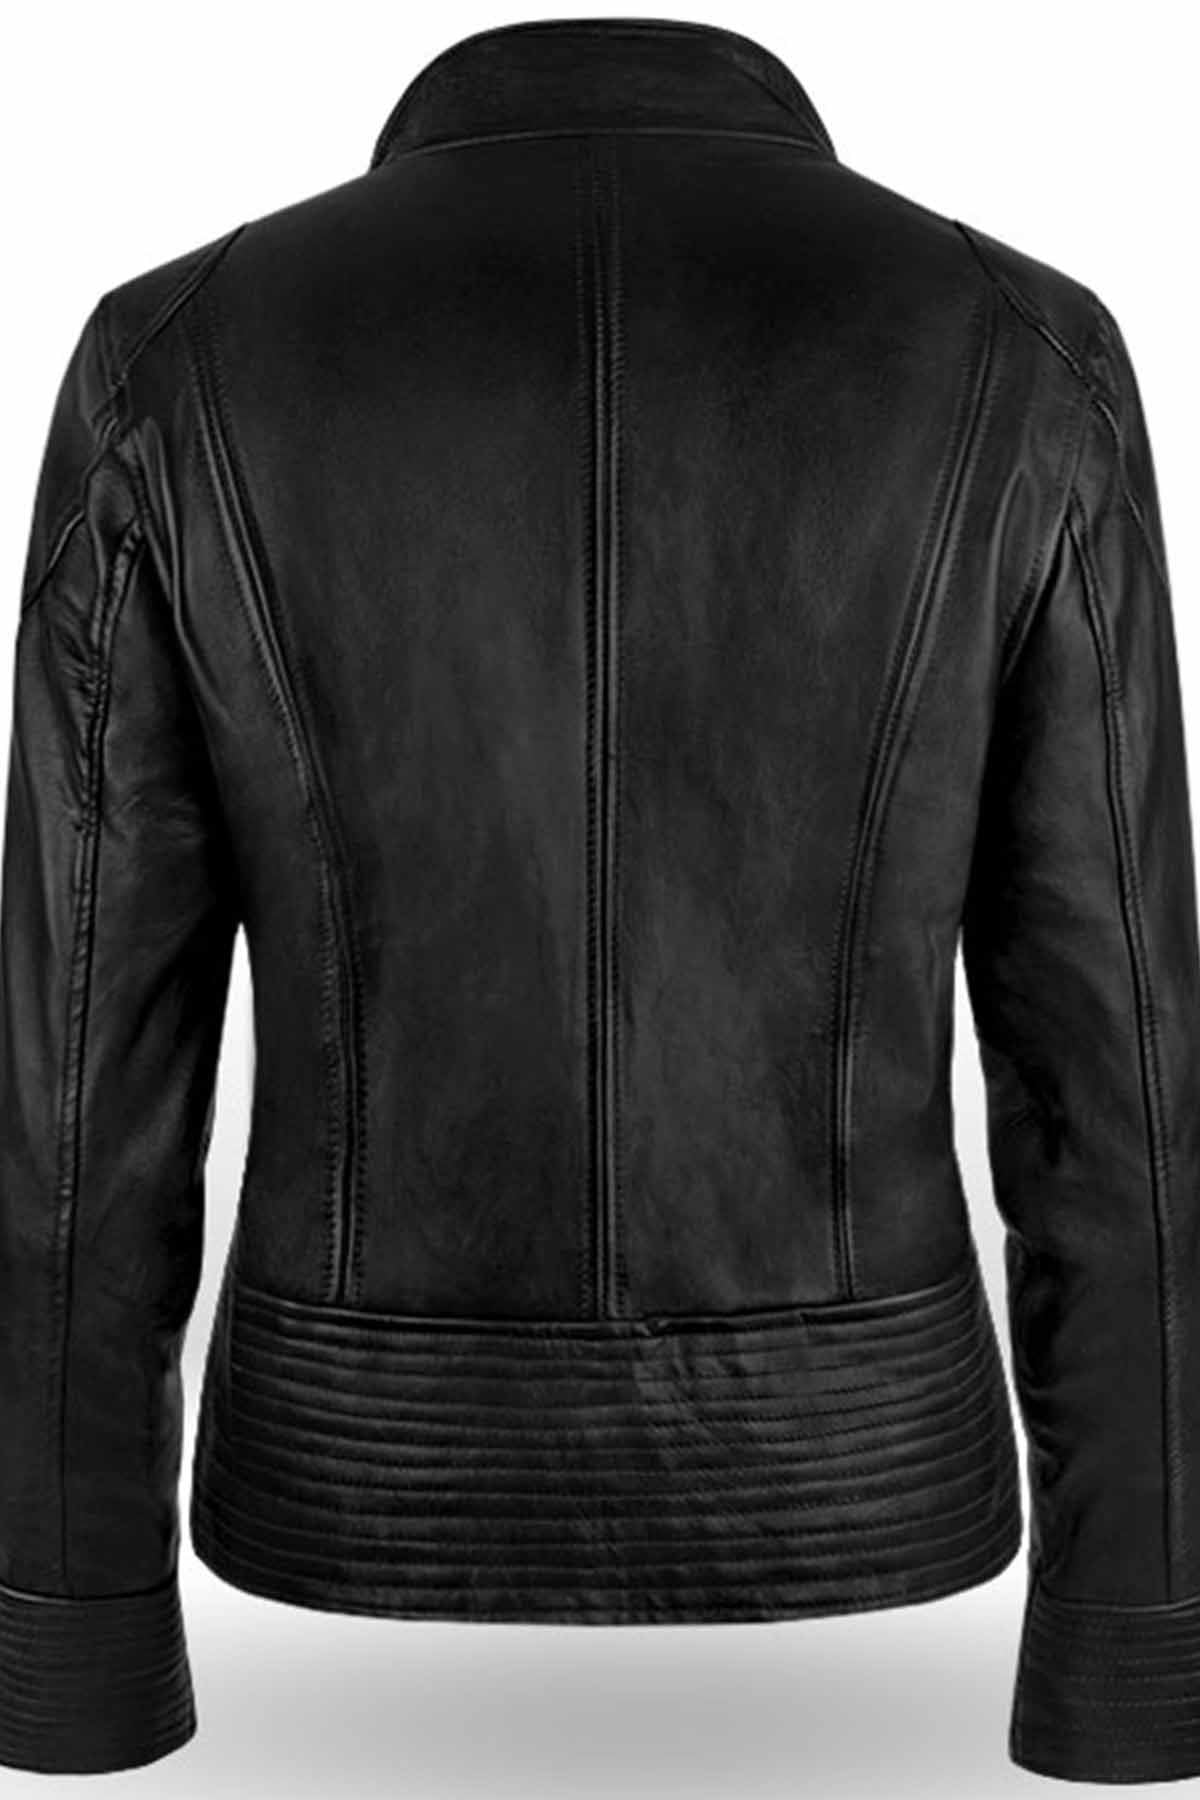 Megan Fox Transformers 2 Leather Jacket